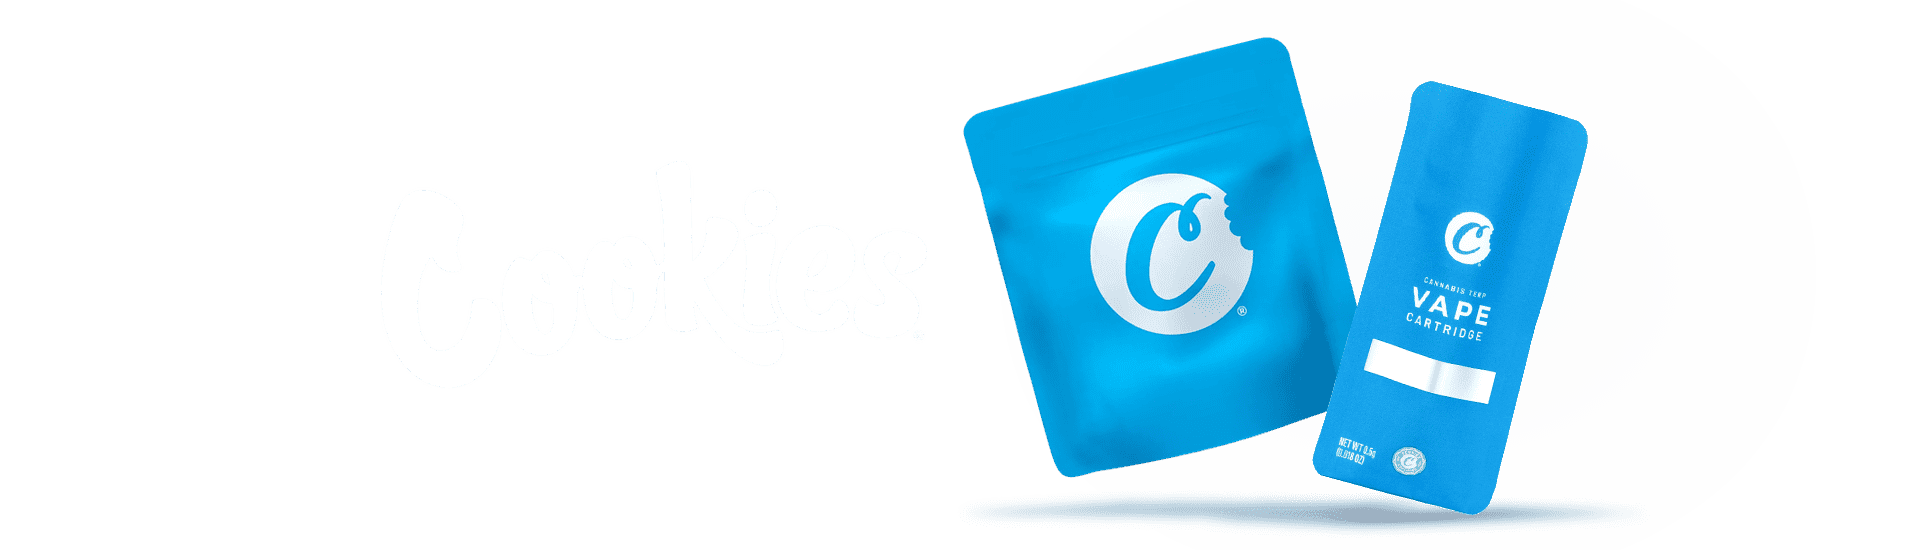 RevCanna-Cookies